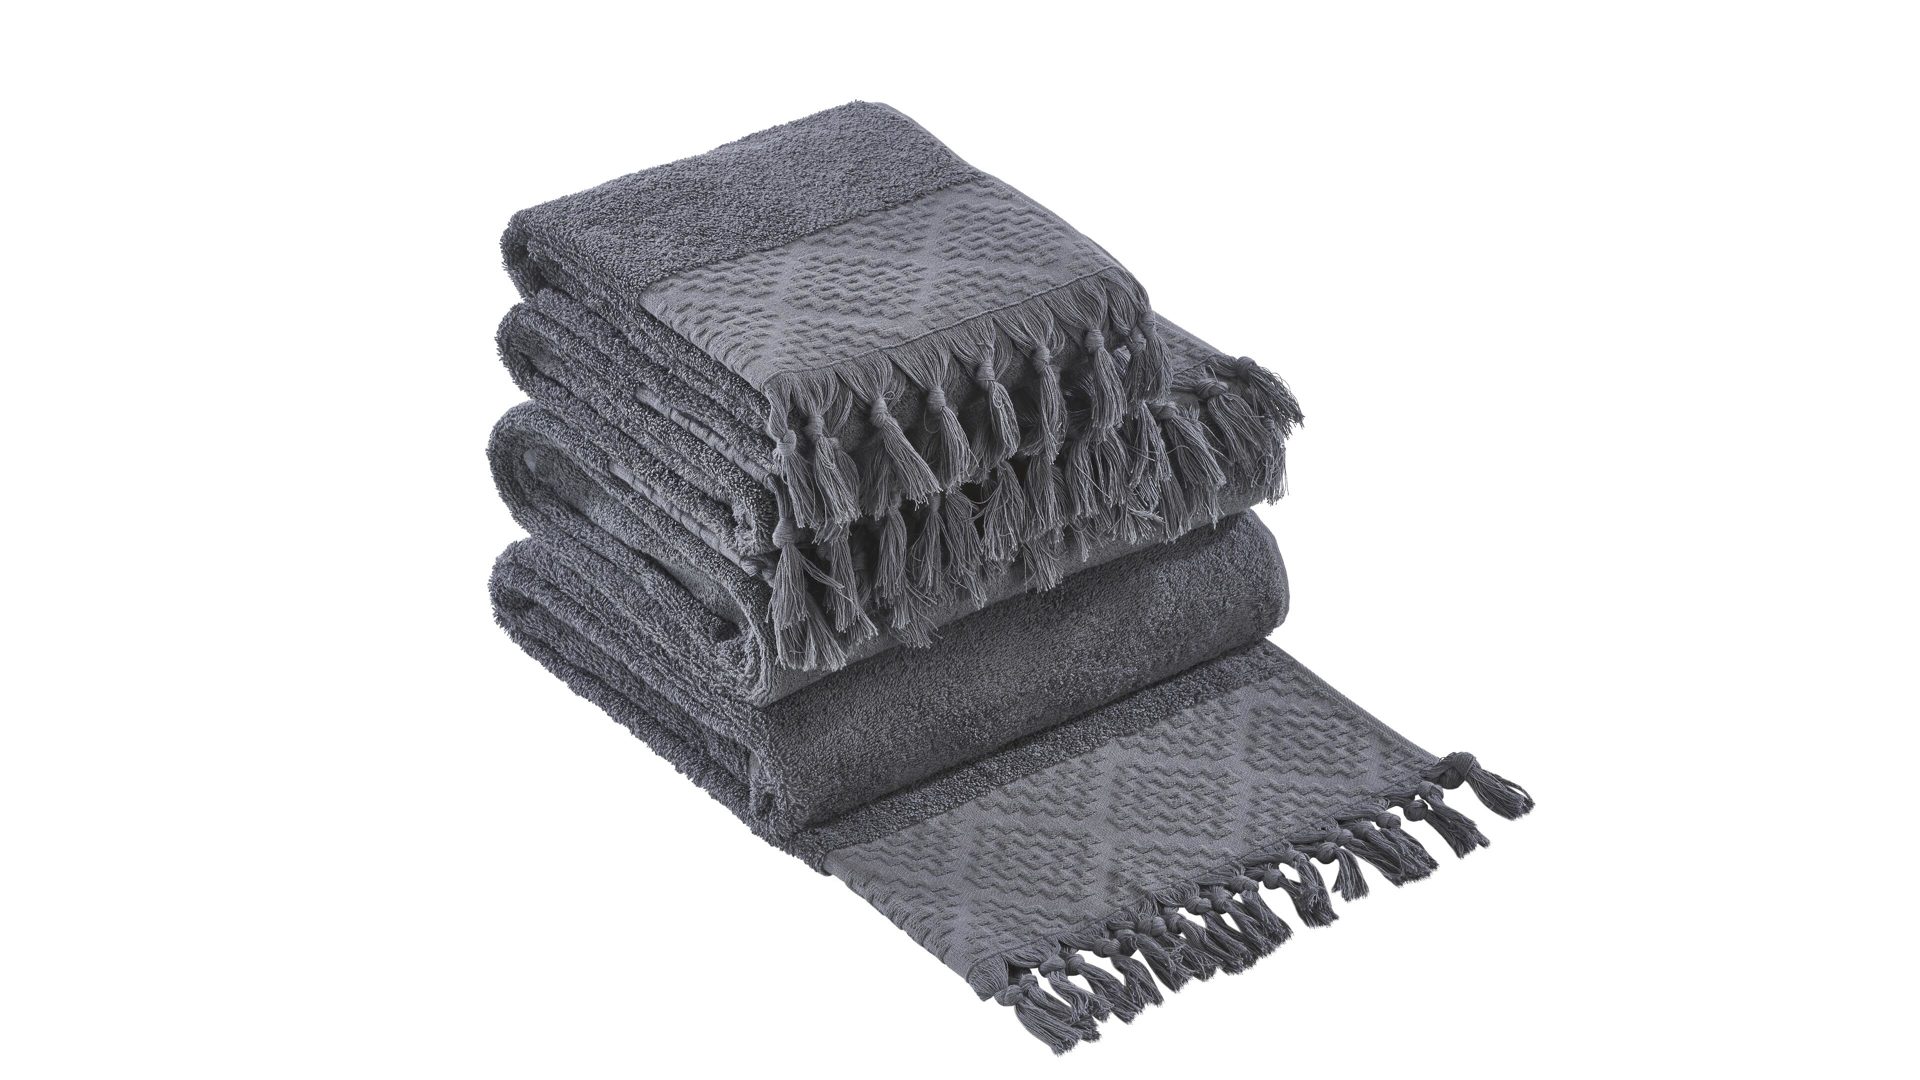 Handtuch-Set Done® by karabel home company aus Stoff in Anthrazit DONE® Handtuch-Set Provence Boheme anthrazitfarbene Baumwolle  – vierteilig